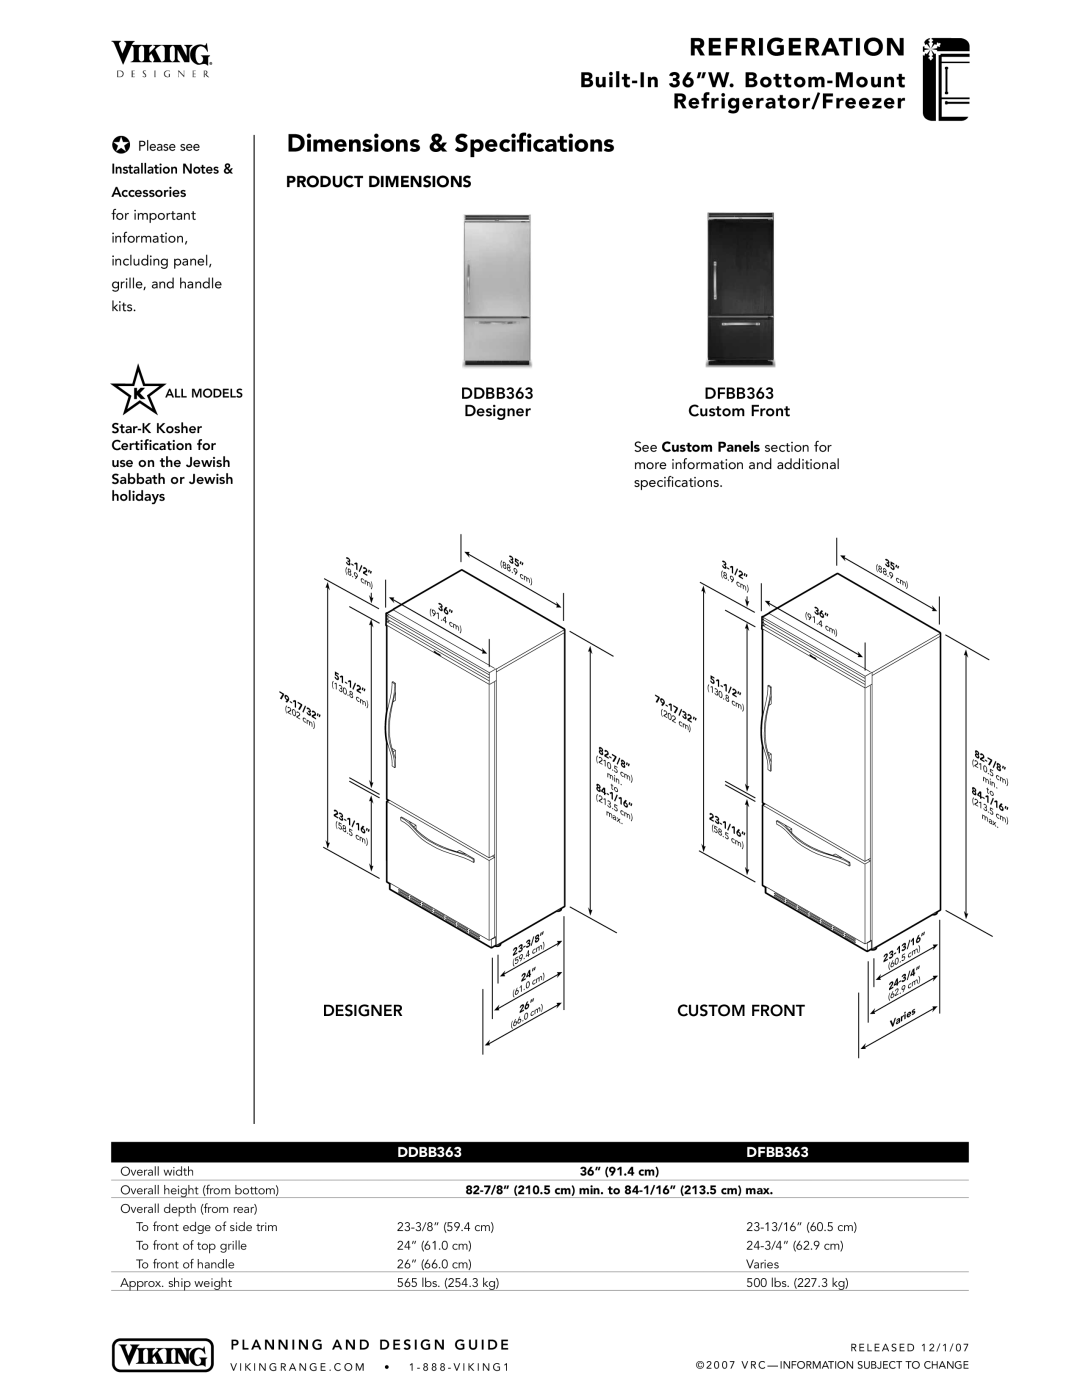 Viking DDBB363 Refrigeration, Dimensions & Specifications, Built-In 36”W. Bottom-Mount Refrigerator/Freezer, 210.7/8” 